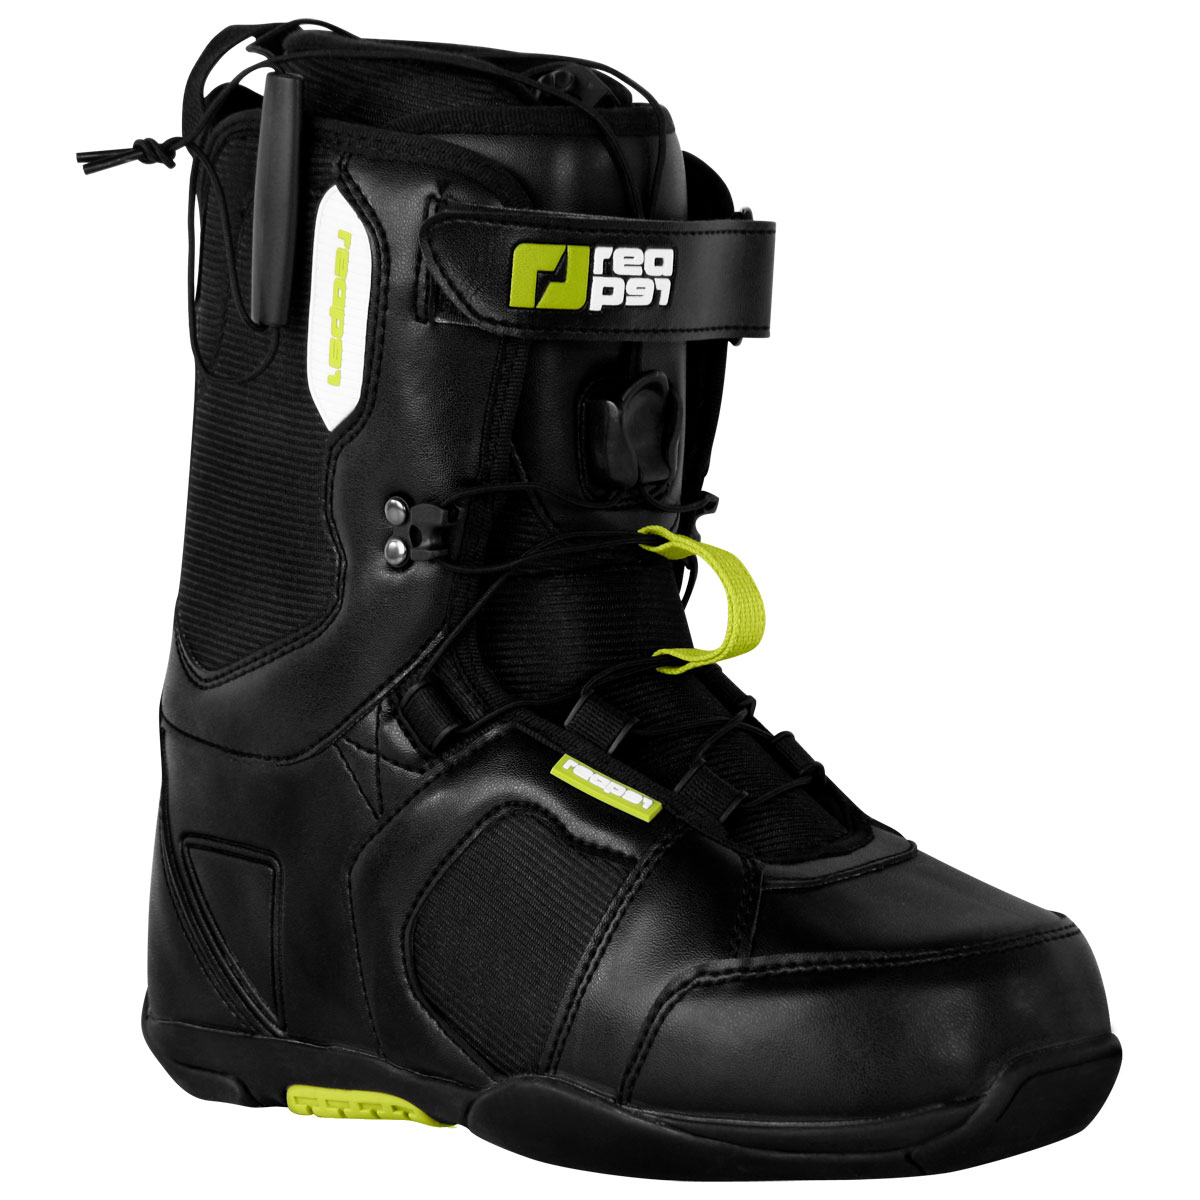 Razor - Men's snowboard boots